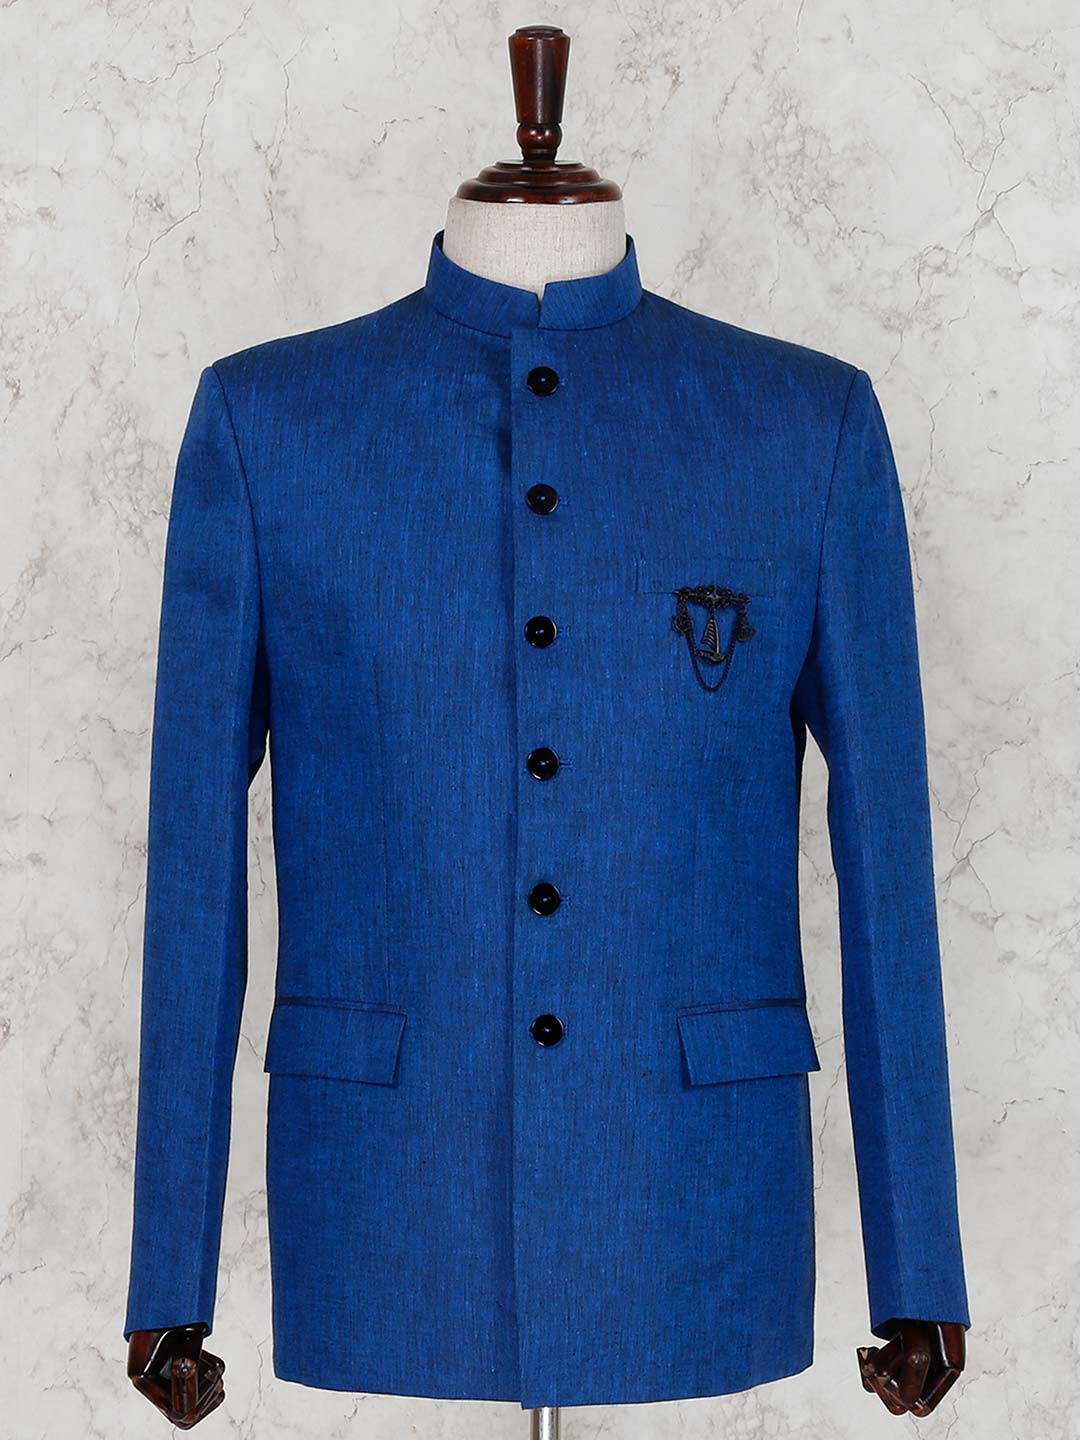 royal blue jodhpuri suit